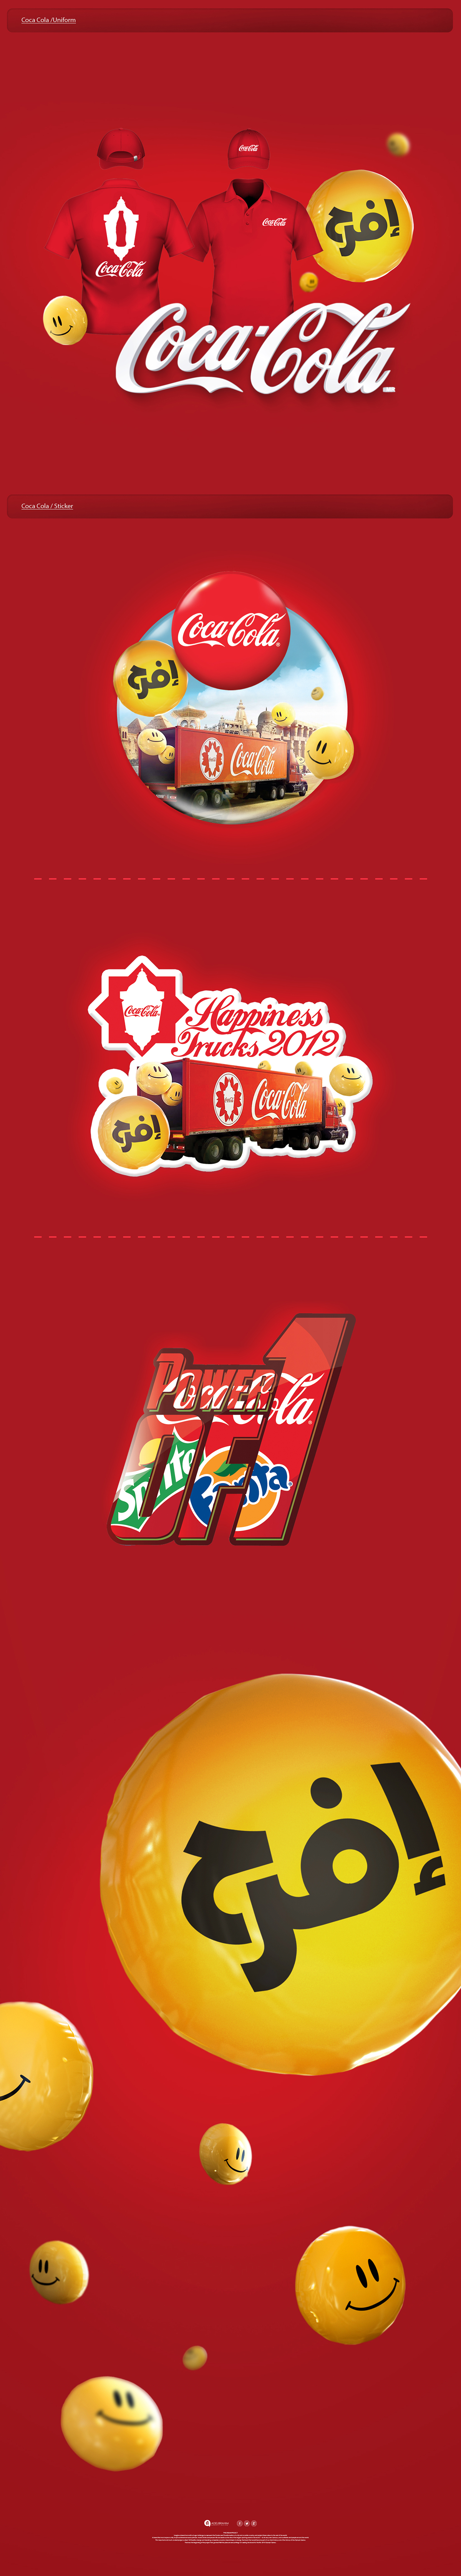 Coca Cola trucks red icons